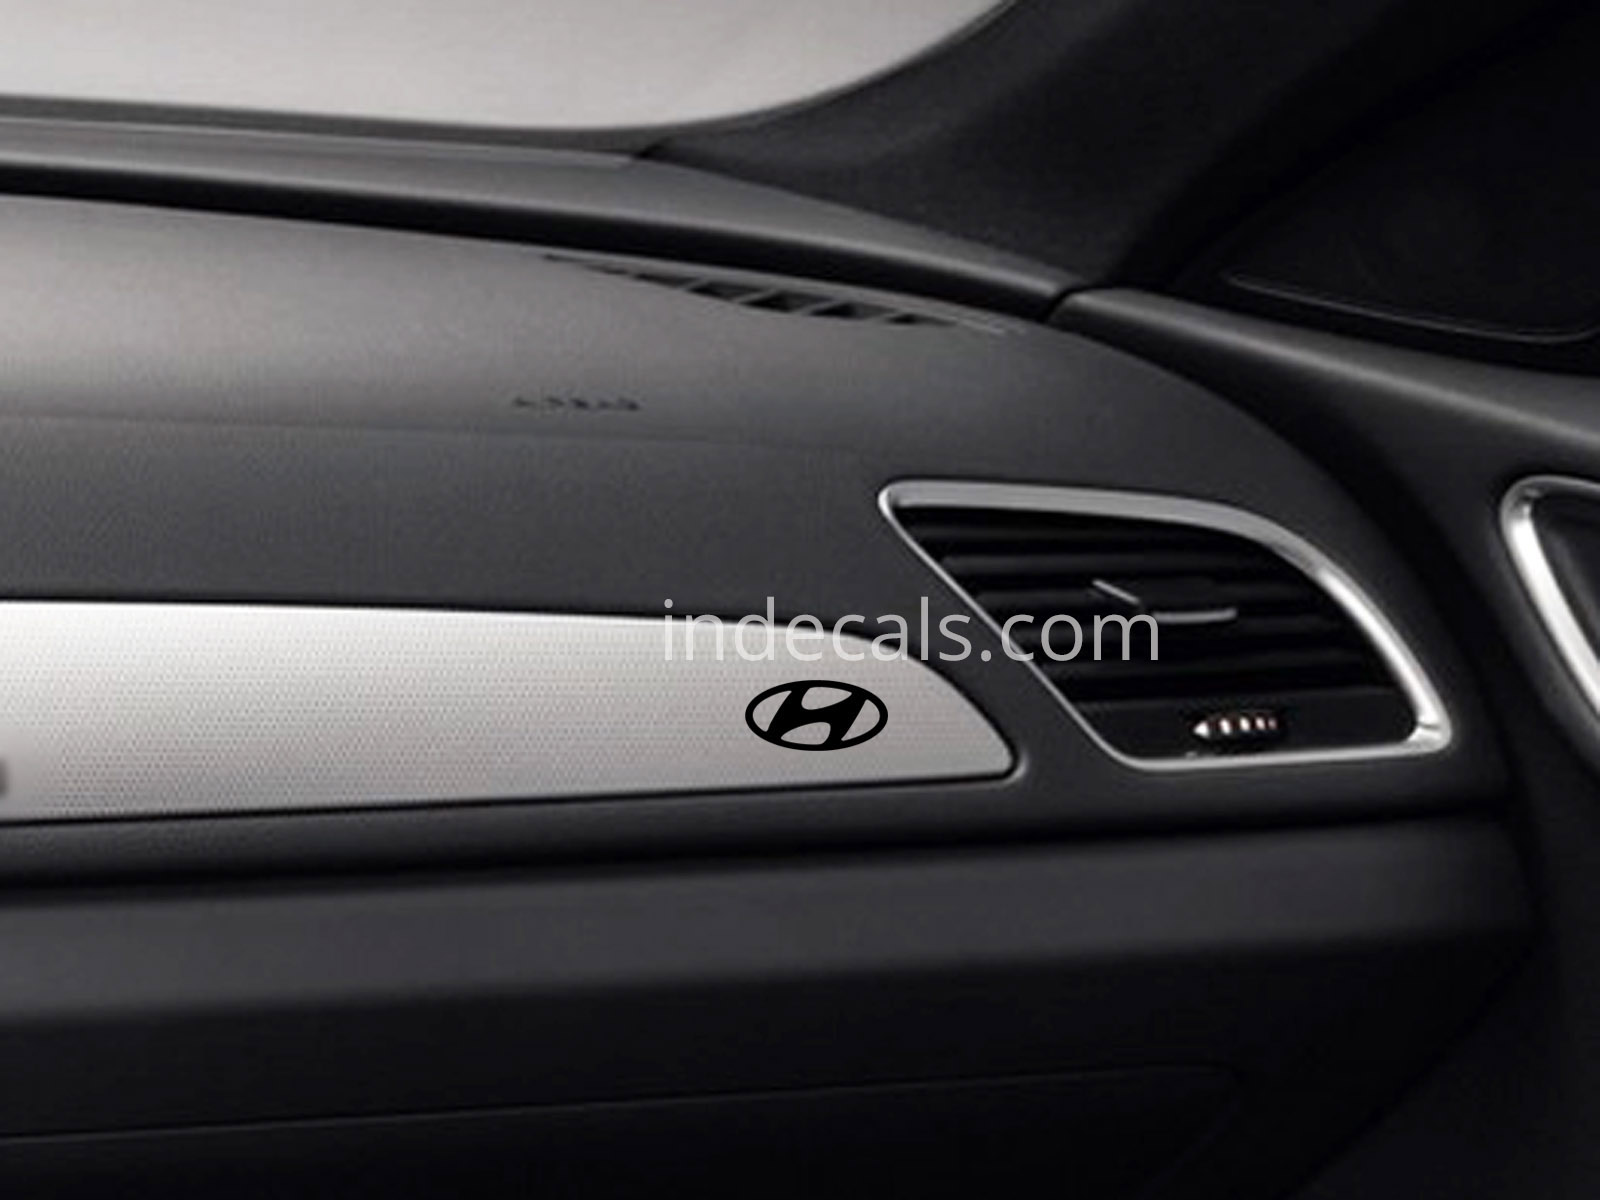 3 x Hyundai Stickers for Dash Trim - Black